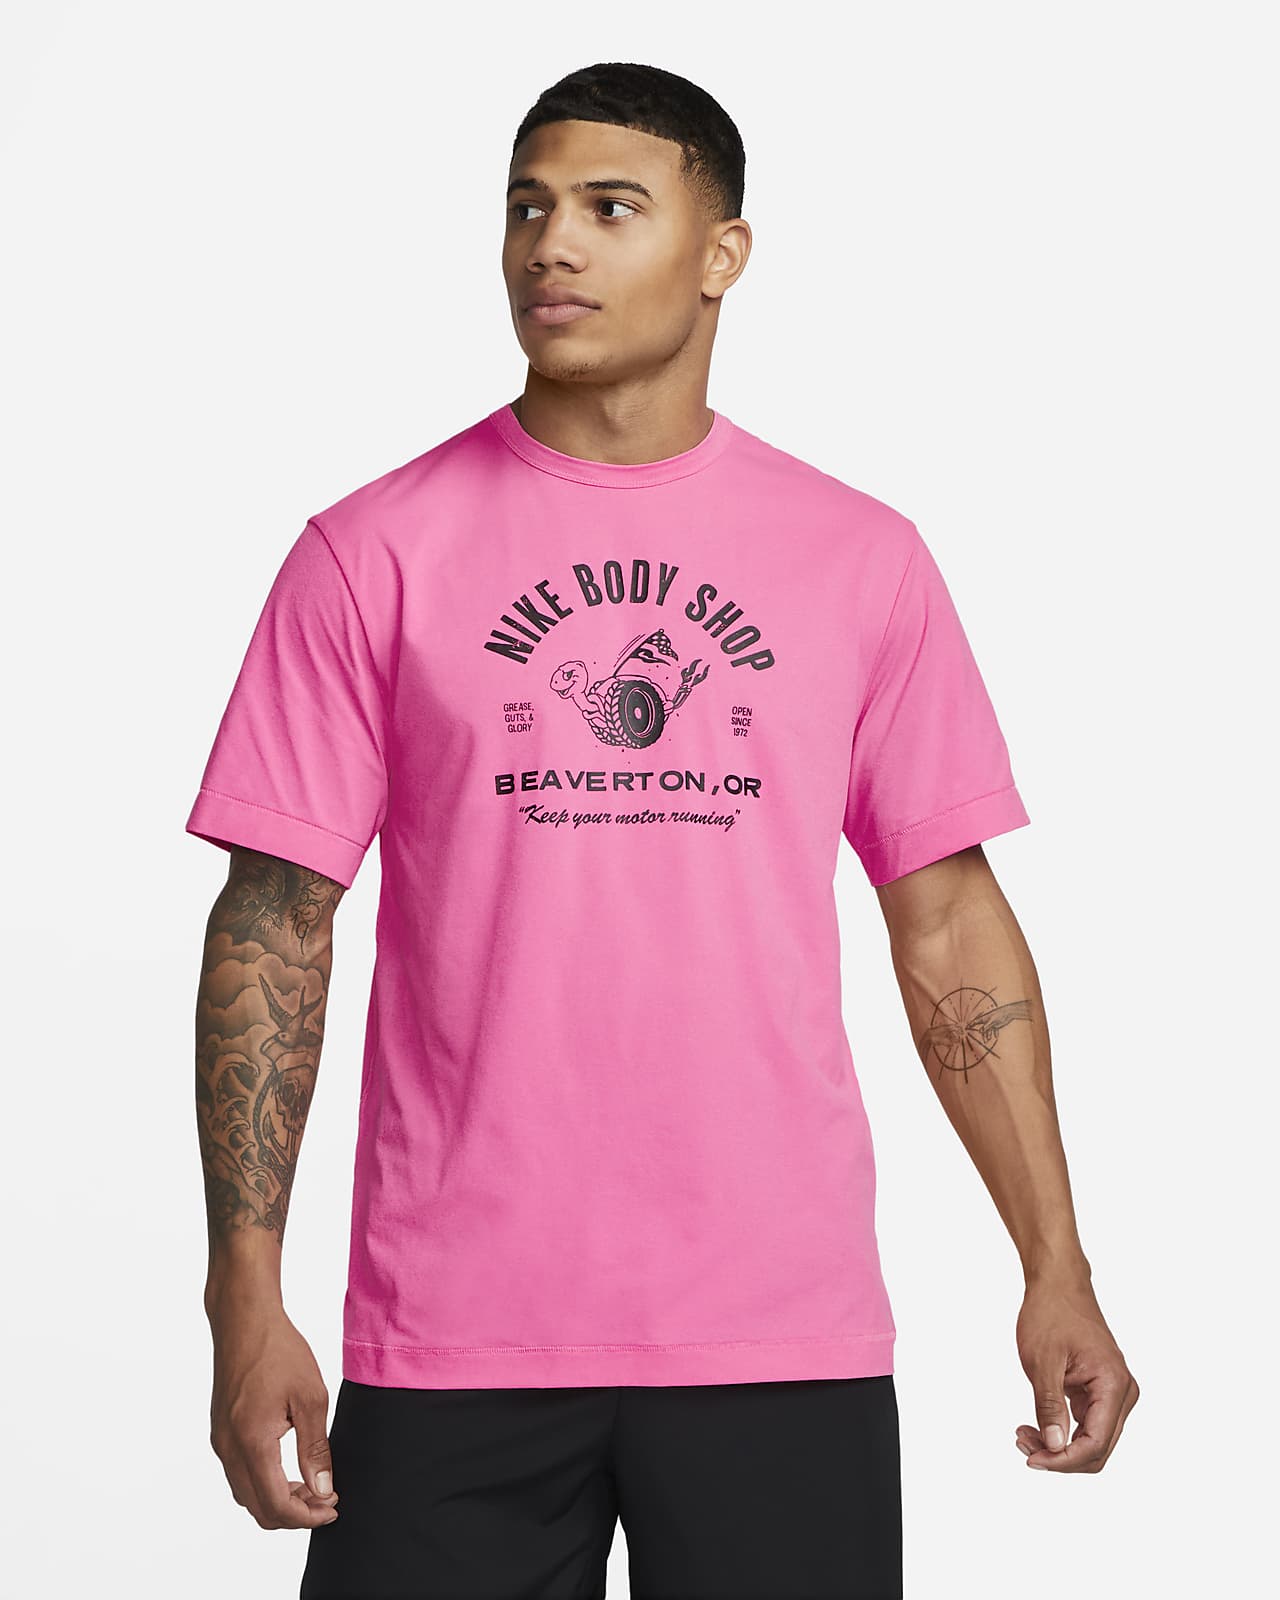 Boys Nike Shirt Size XL Black Short Sleeve T Shirt - beyond exchange